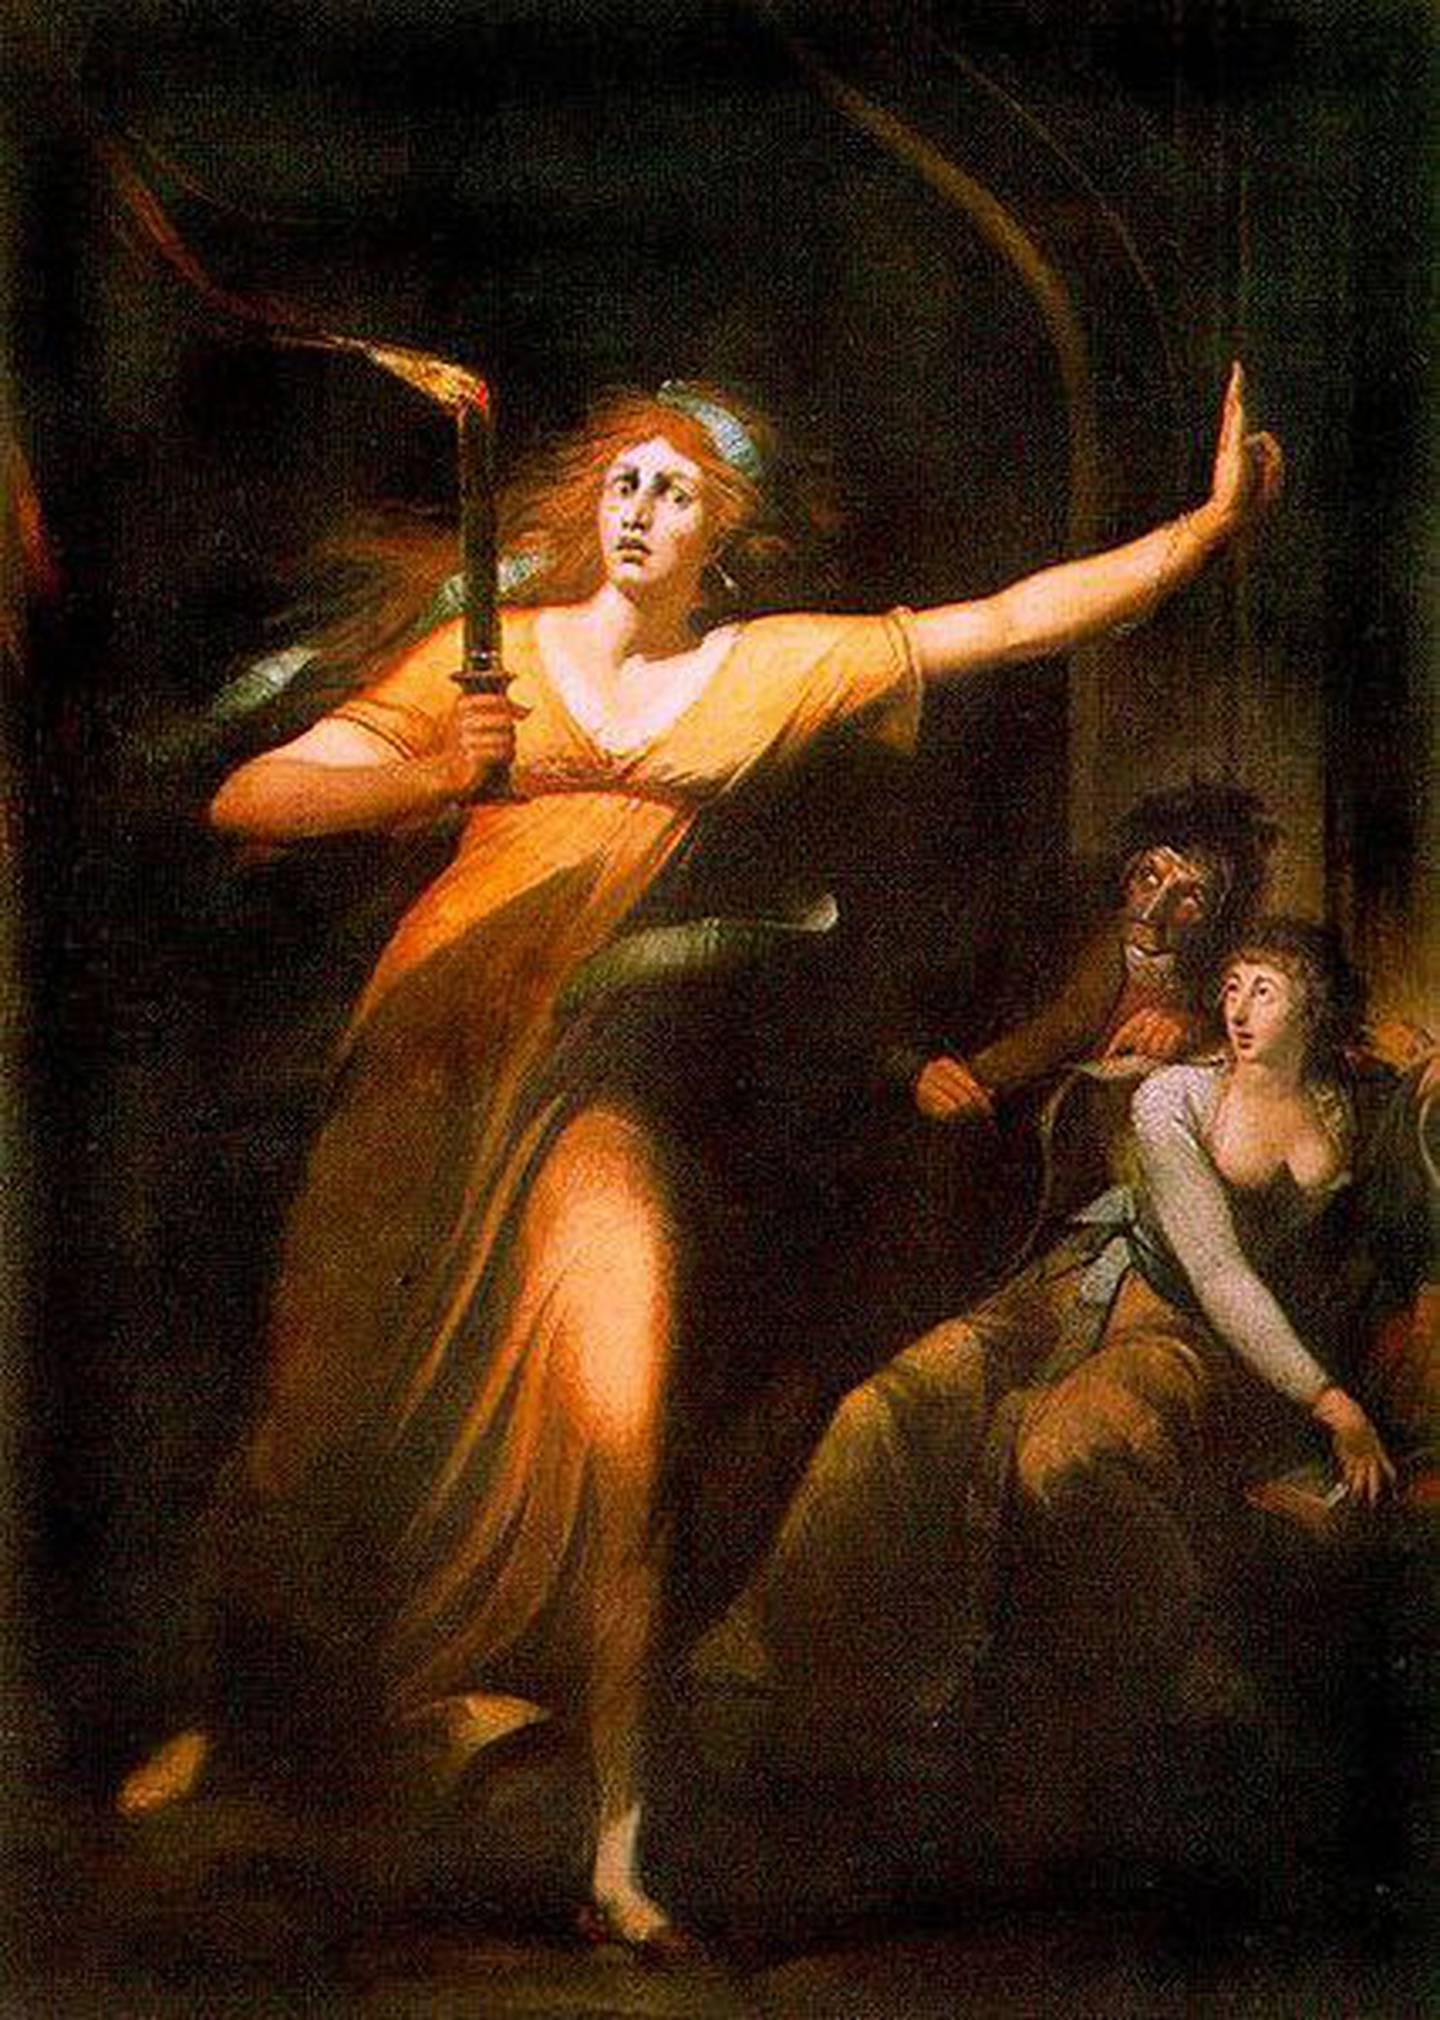 El pintor suizo Johann Heinrich Füssli, ilustró la escena de Lady Macbeth sonámbula, de la tragedia 'Macbeth' de Shakespeare.